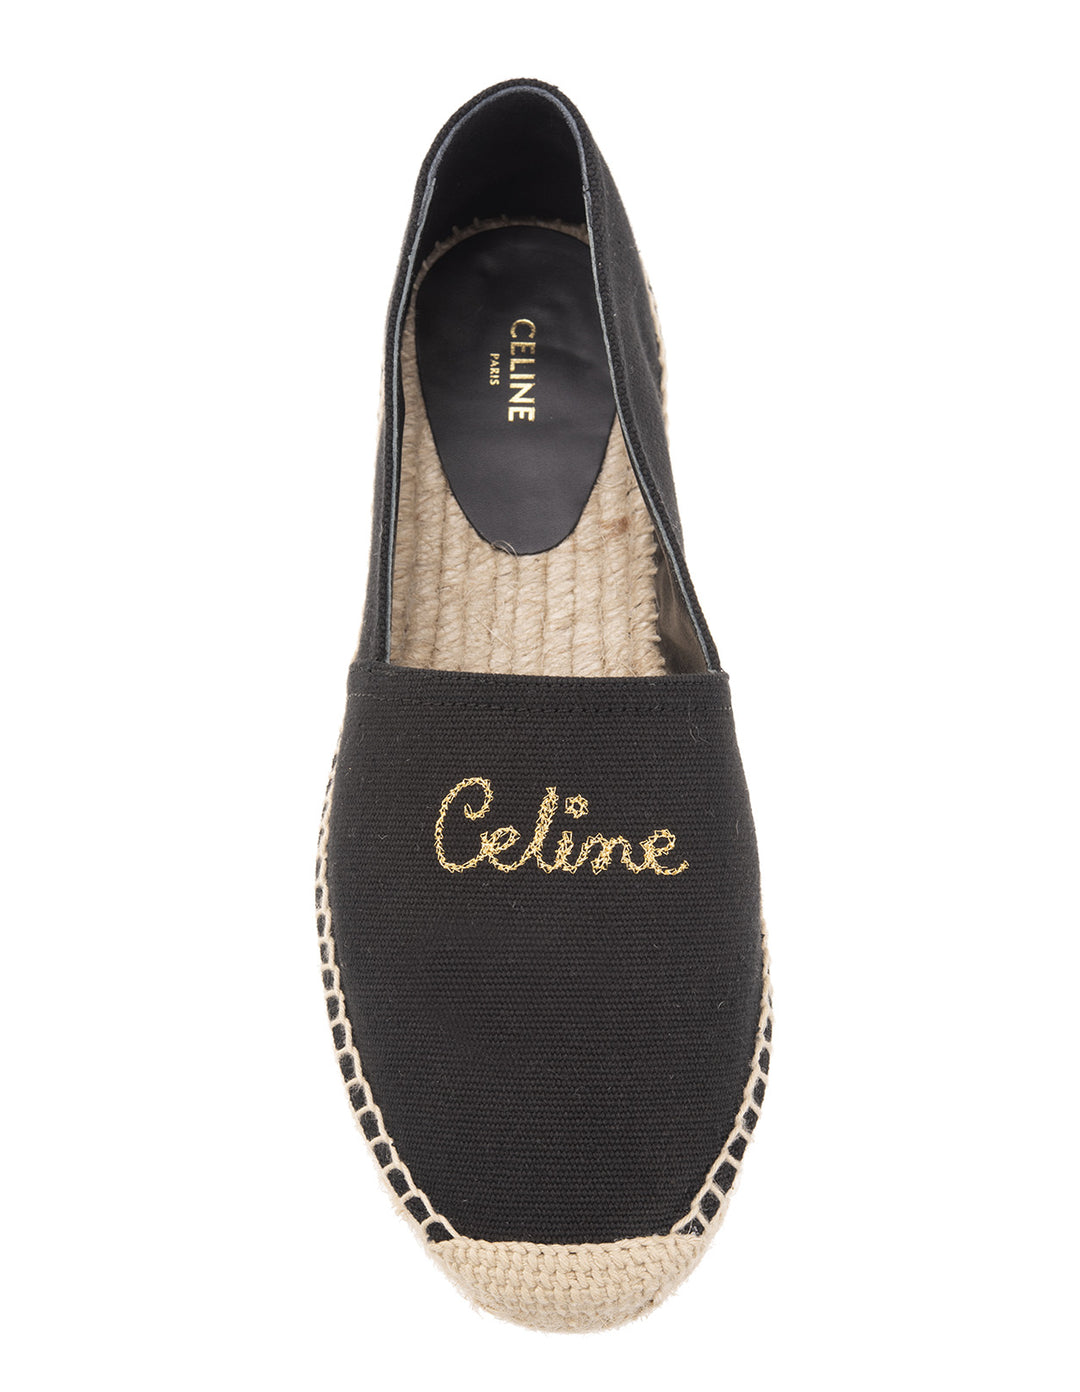 Espadrillas nere con logo-Celine-Wanan Luxury